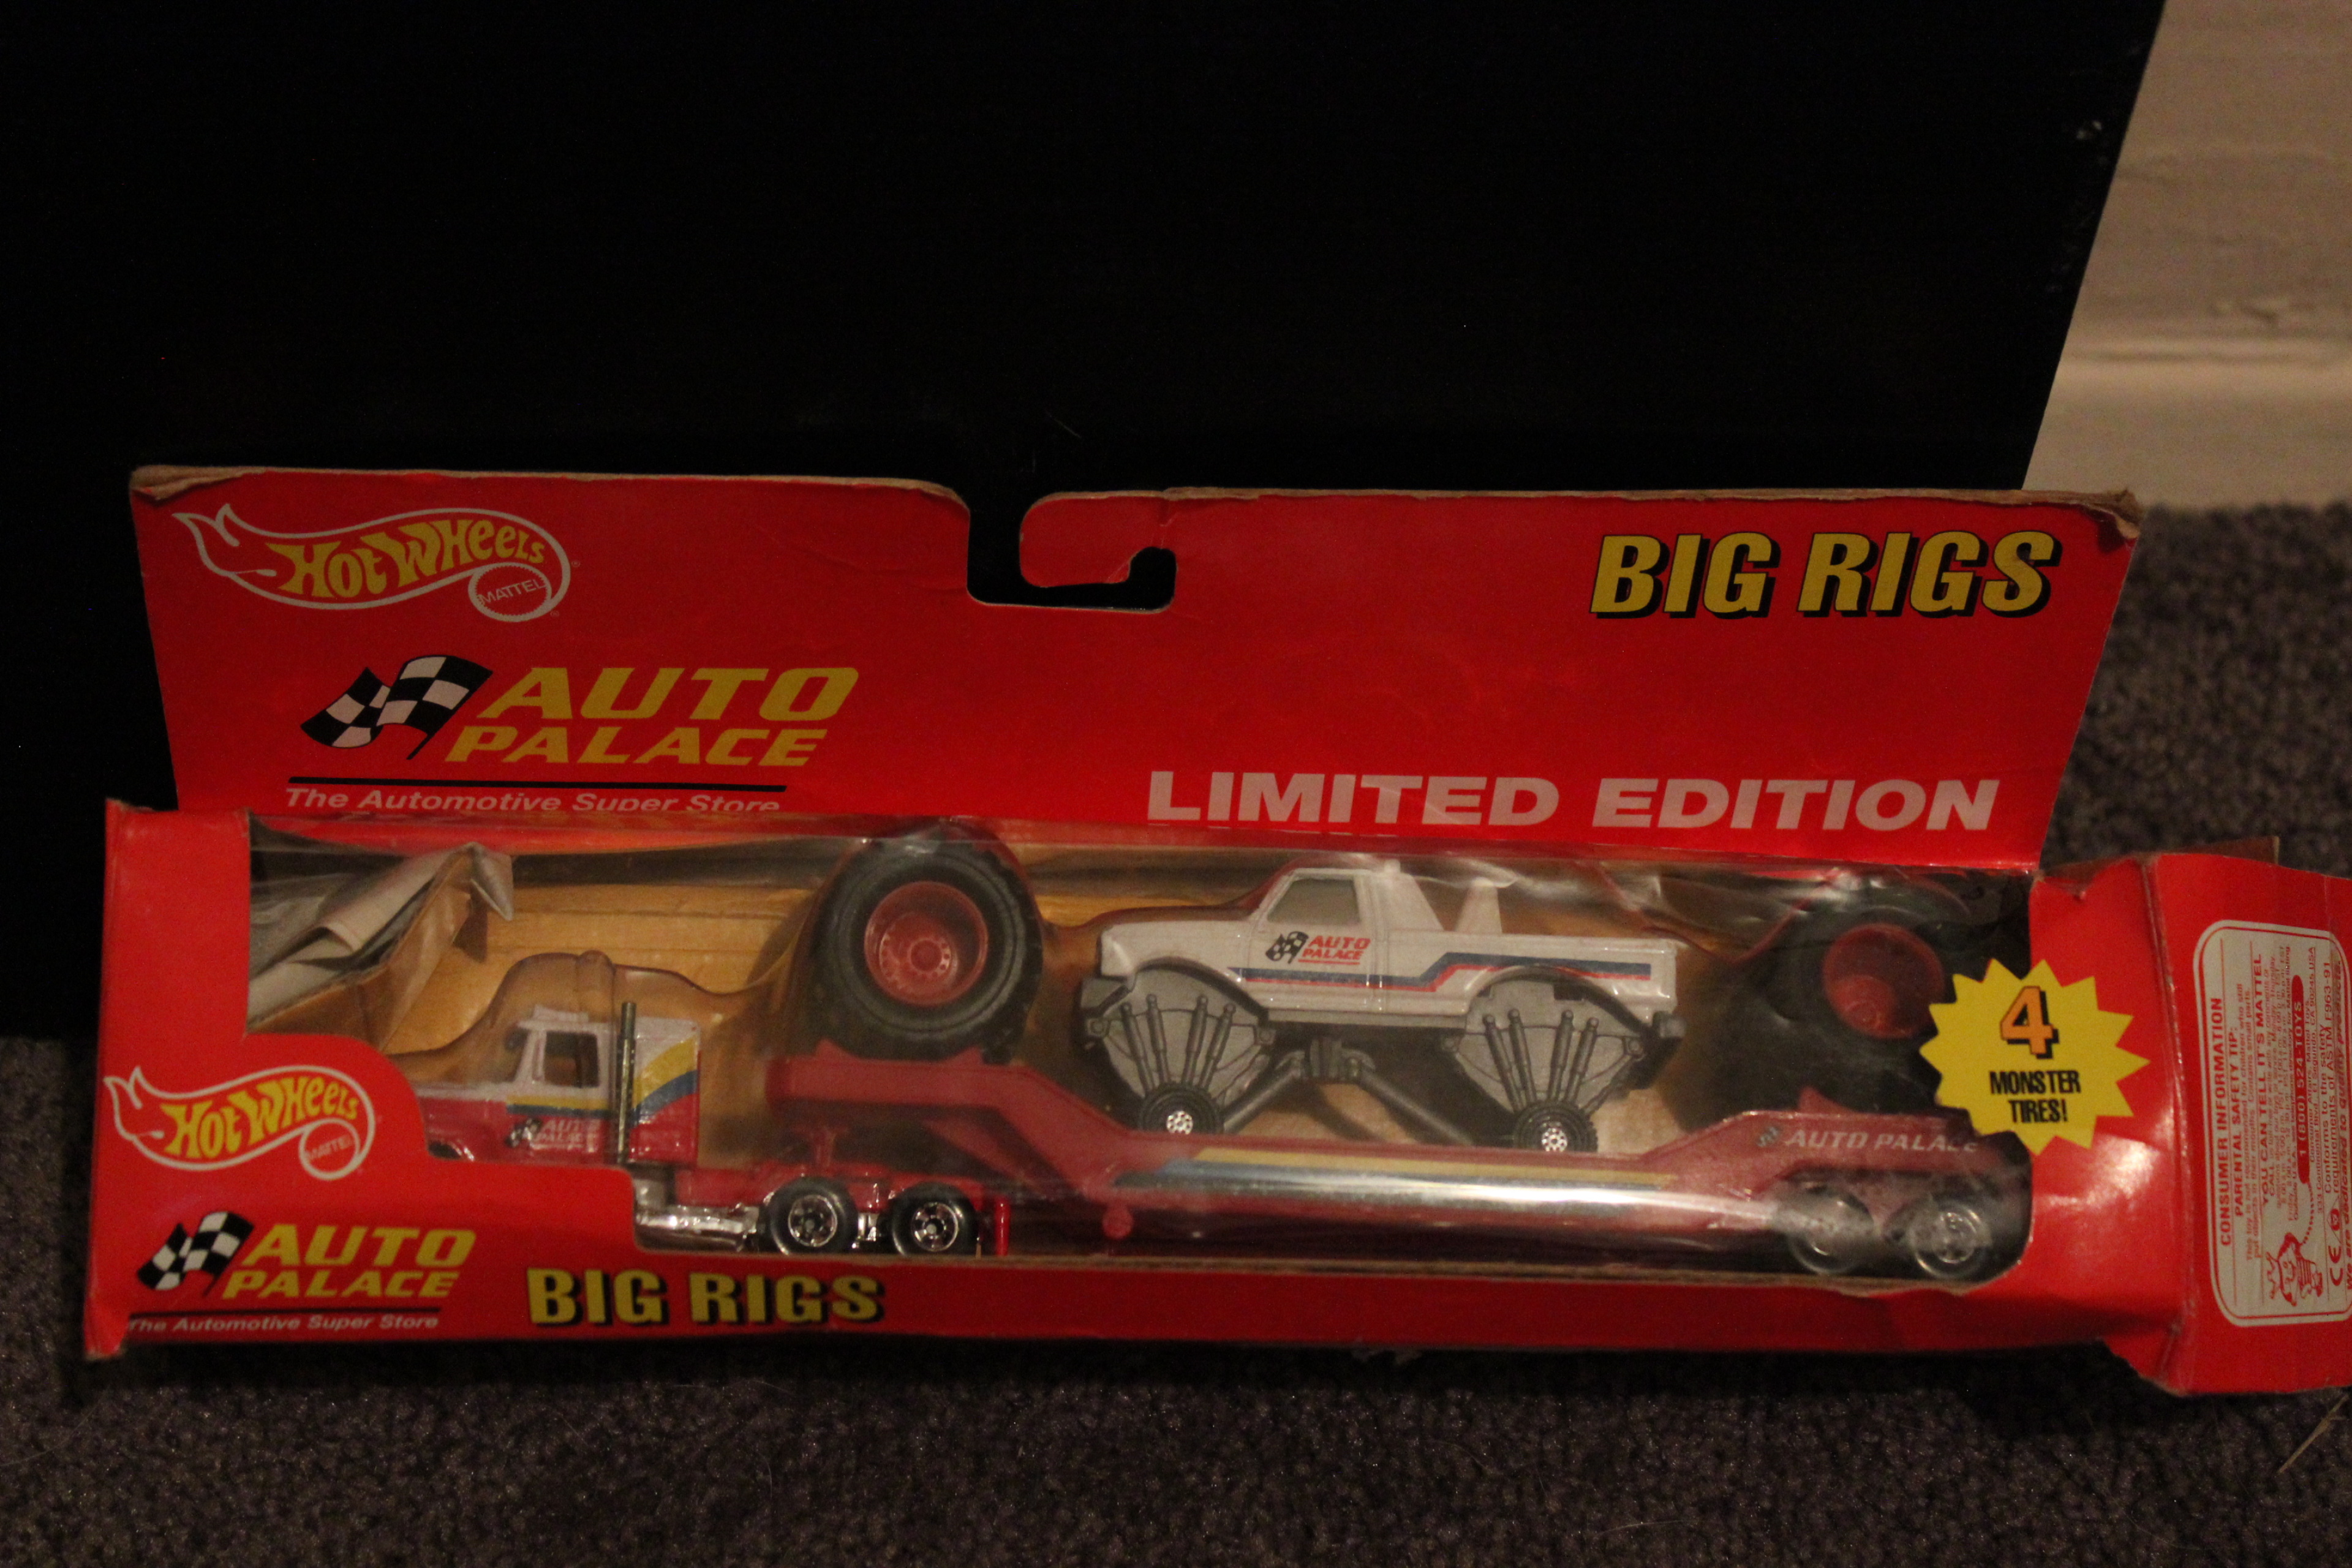 1992 Mattel Hot Wheels Auto Palace Big Rigs Limited Edition